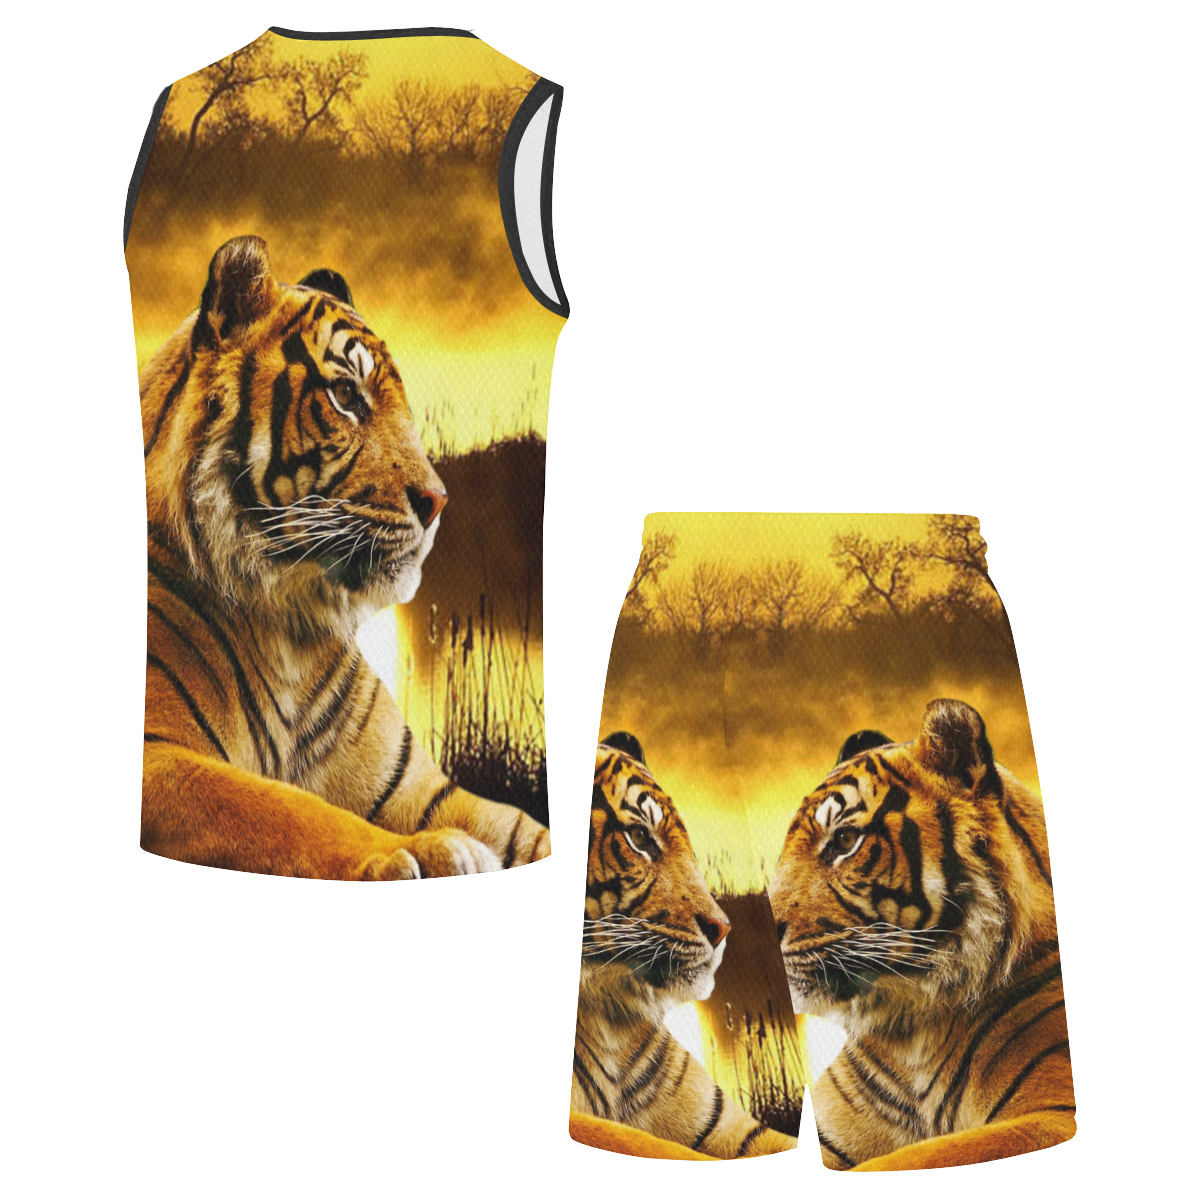 Tiger and Sunset All Over Print Basketball Uniform